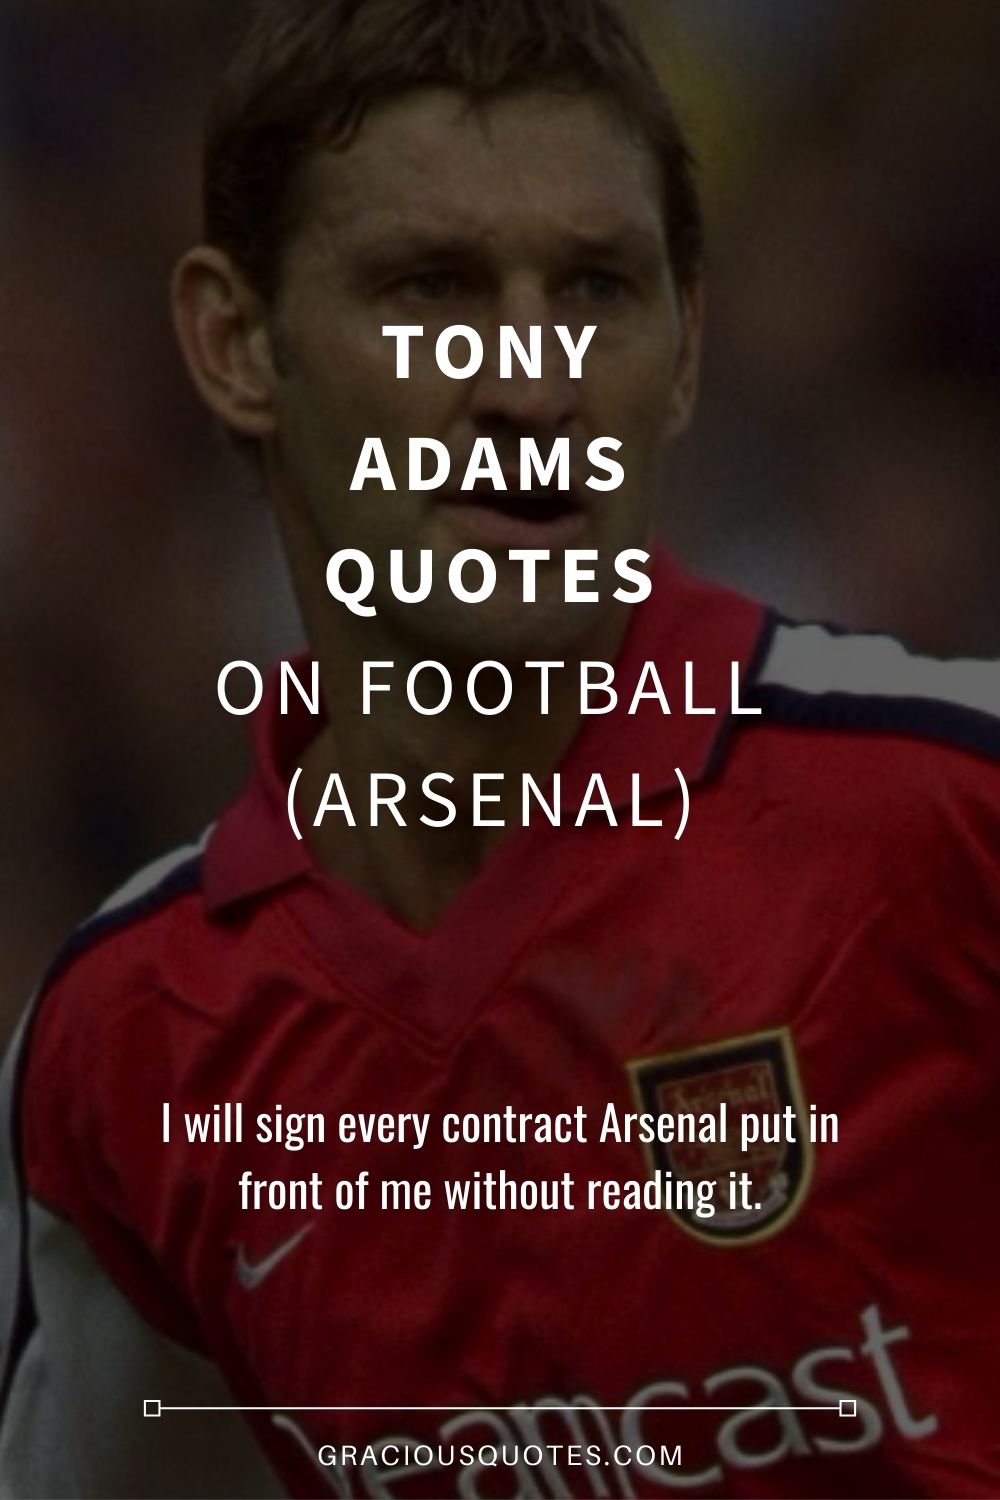 Tony Adams Quotes on Football (ARSENAL) - Gracious Quotes